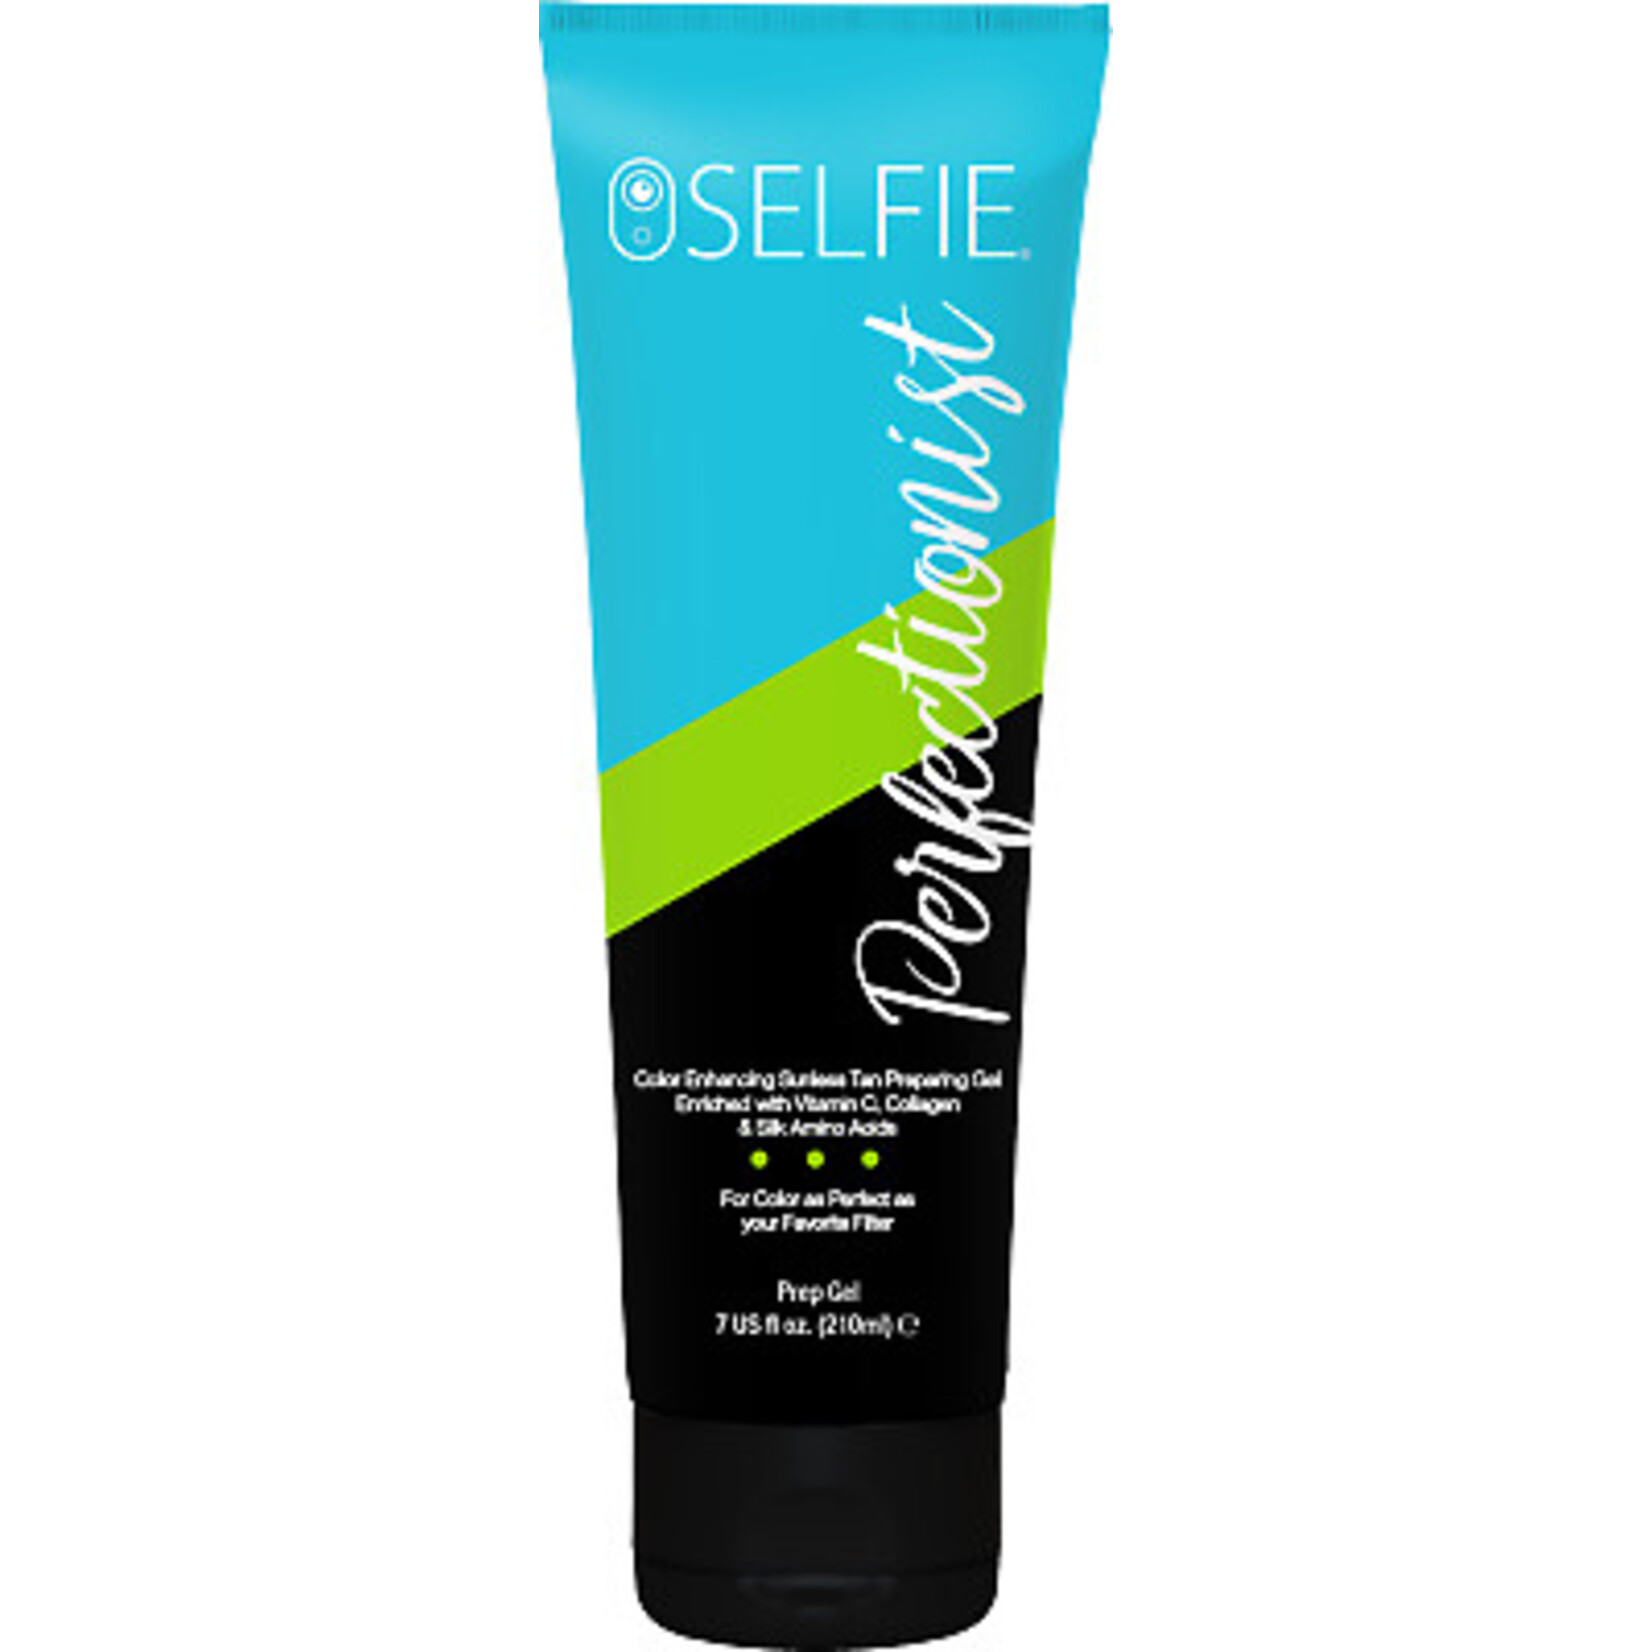 SELFIE Selfie Perfectionist Prep Gel - Color Enhancing Sunless Tan Preparing Gel Enriched with Vitamin C, Collagen, and Silk Amino Acids 7oz